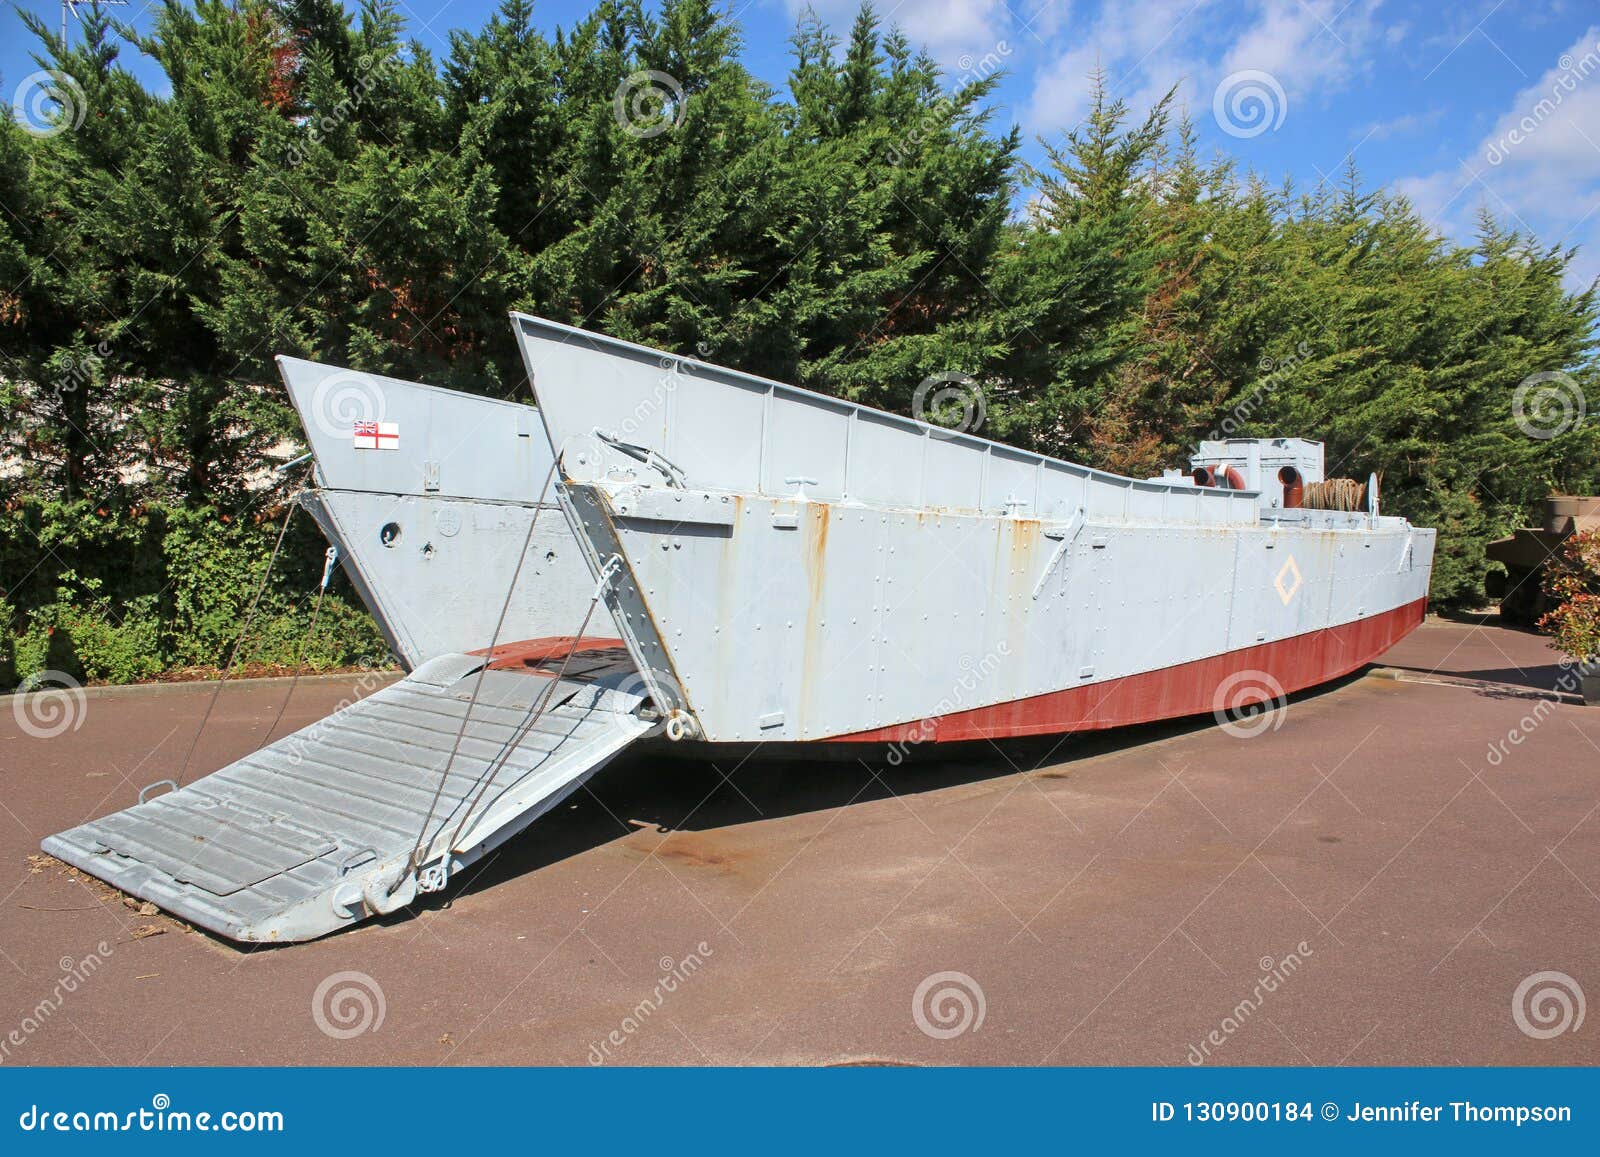 world war two landing craft stock photo - image of france